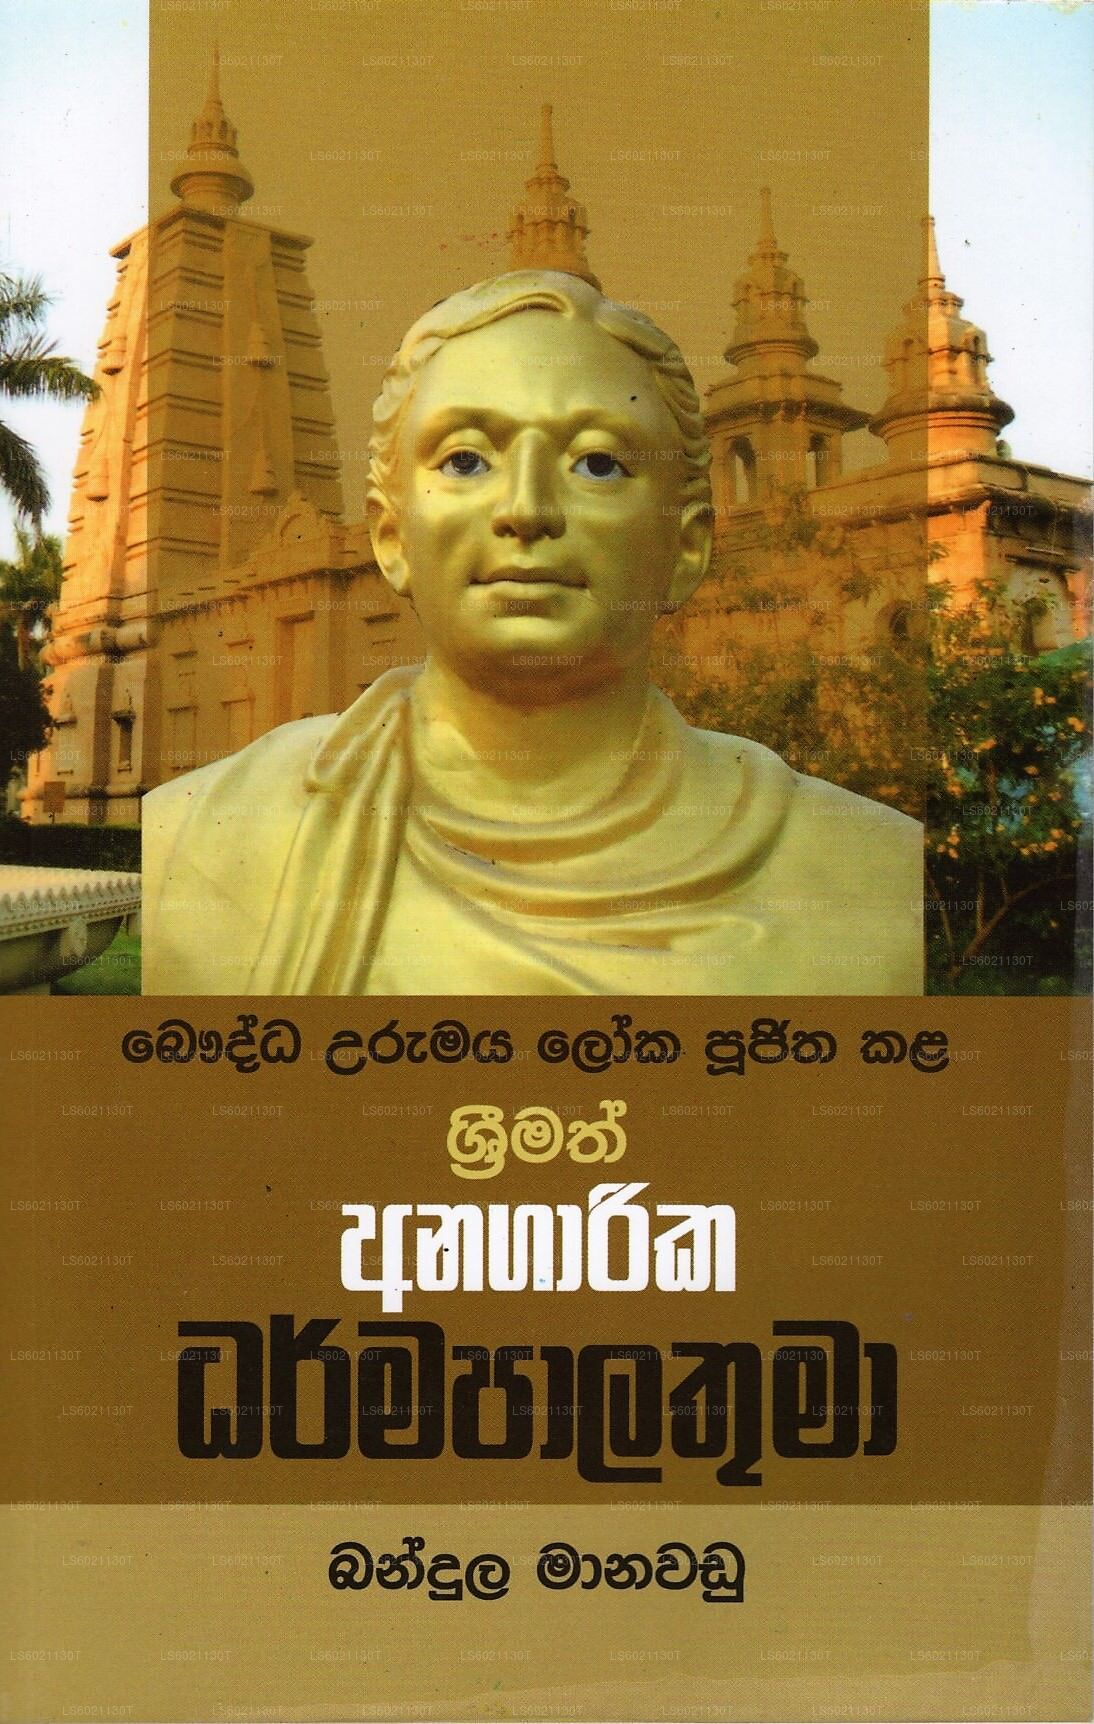 Bauddha Urumaya Loka Pujitha Kala Shrimath Anagarika Dharmapalathuma